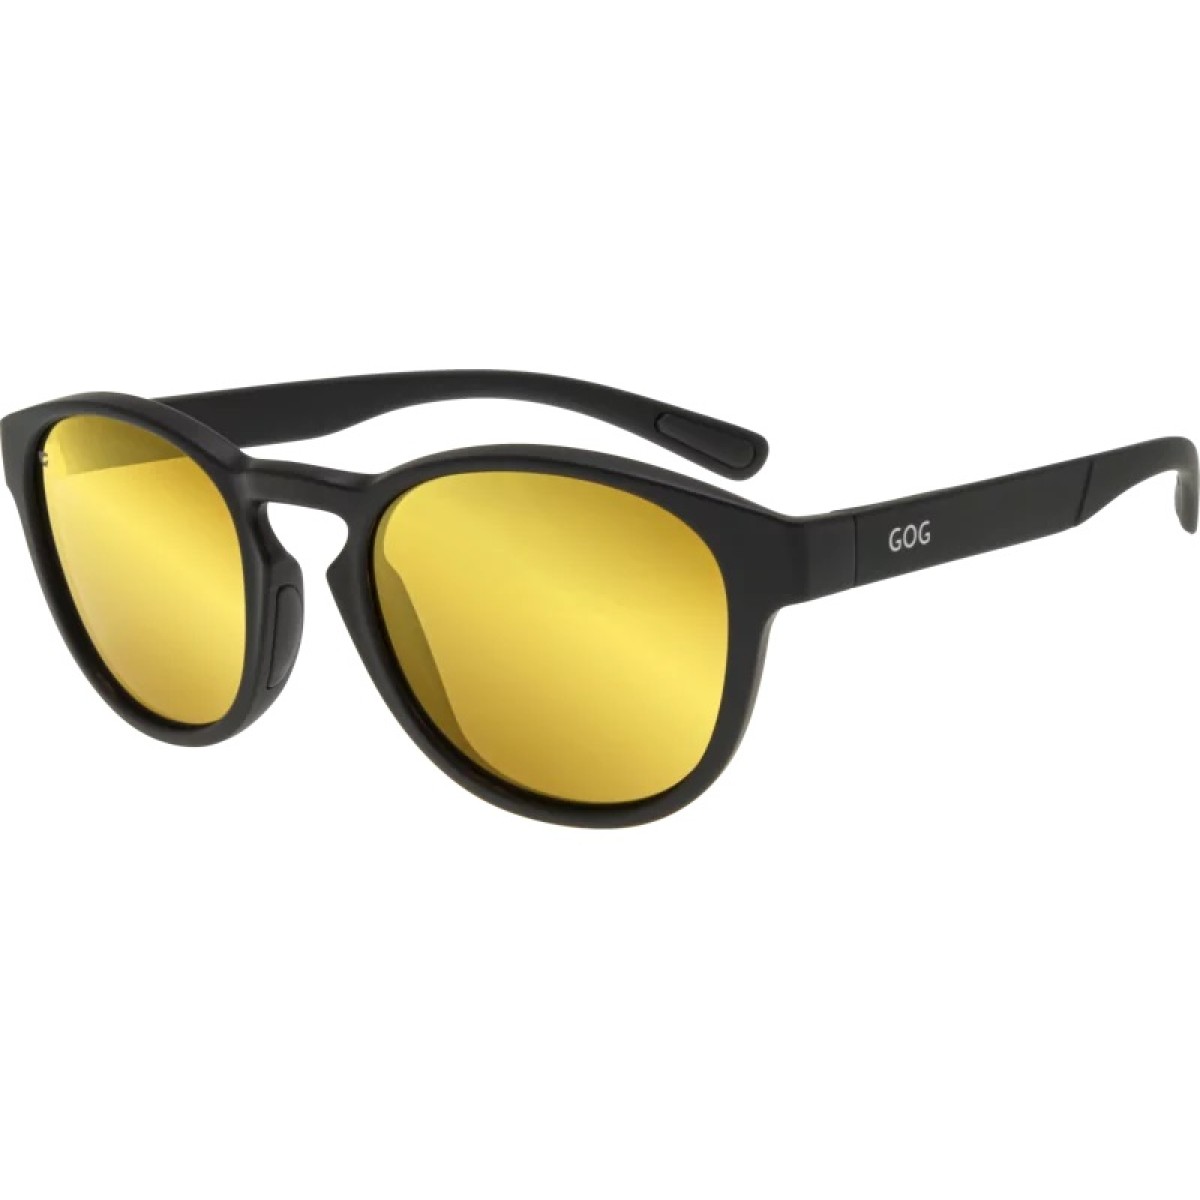 Sunglasses Polarized E705-2P GOG - view 1